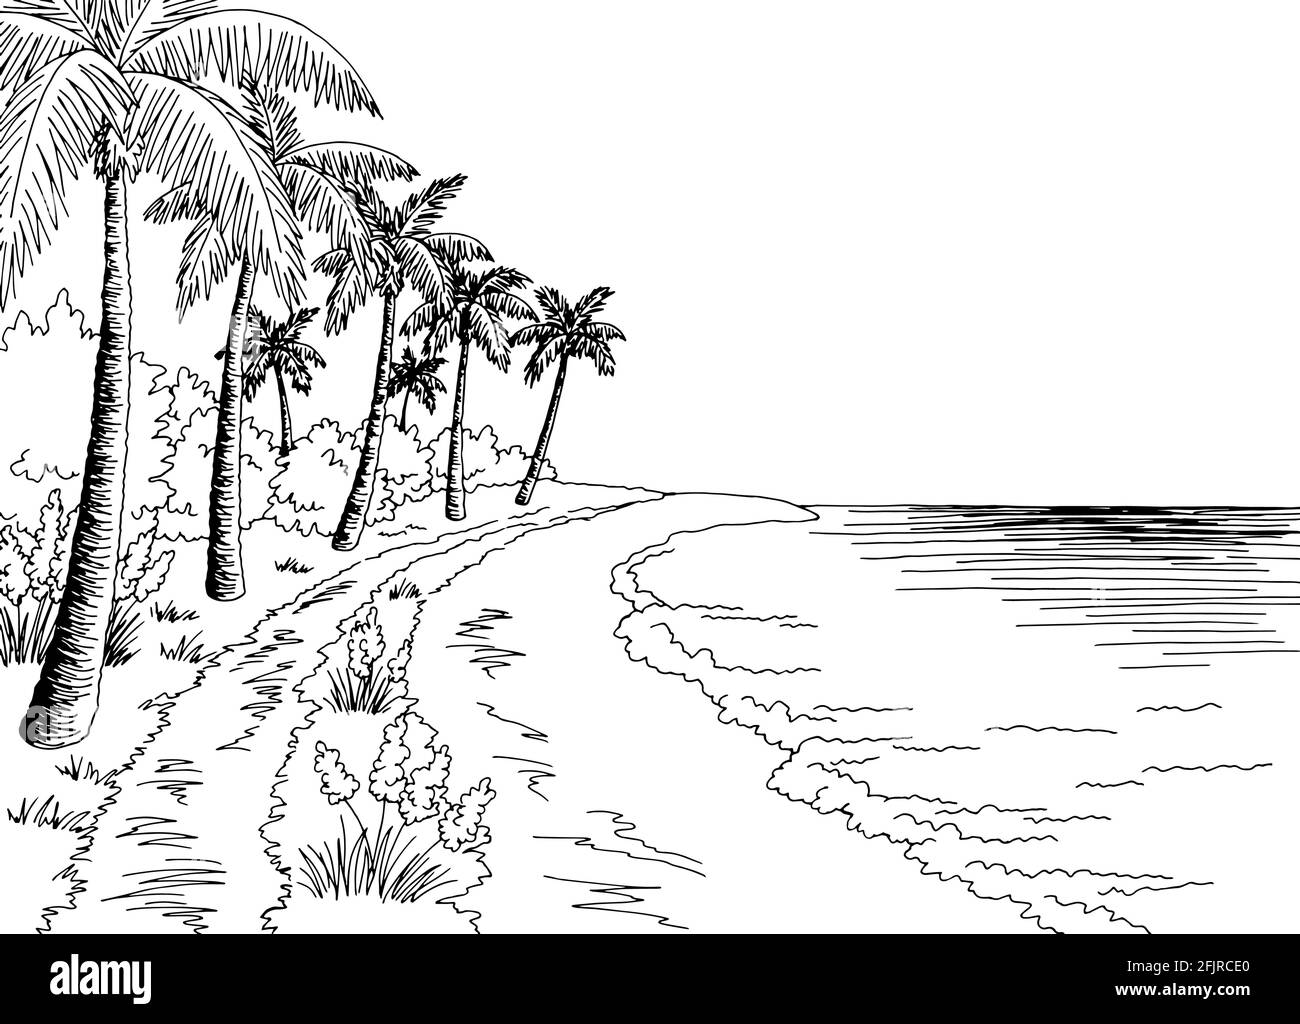 Beach road graphic beach black white landscape sketch illustration vector Stock Vector